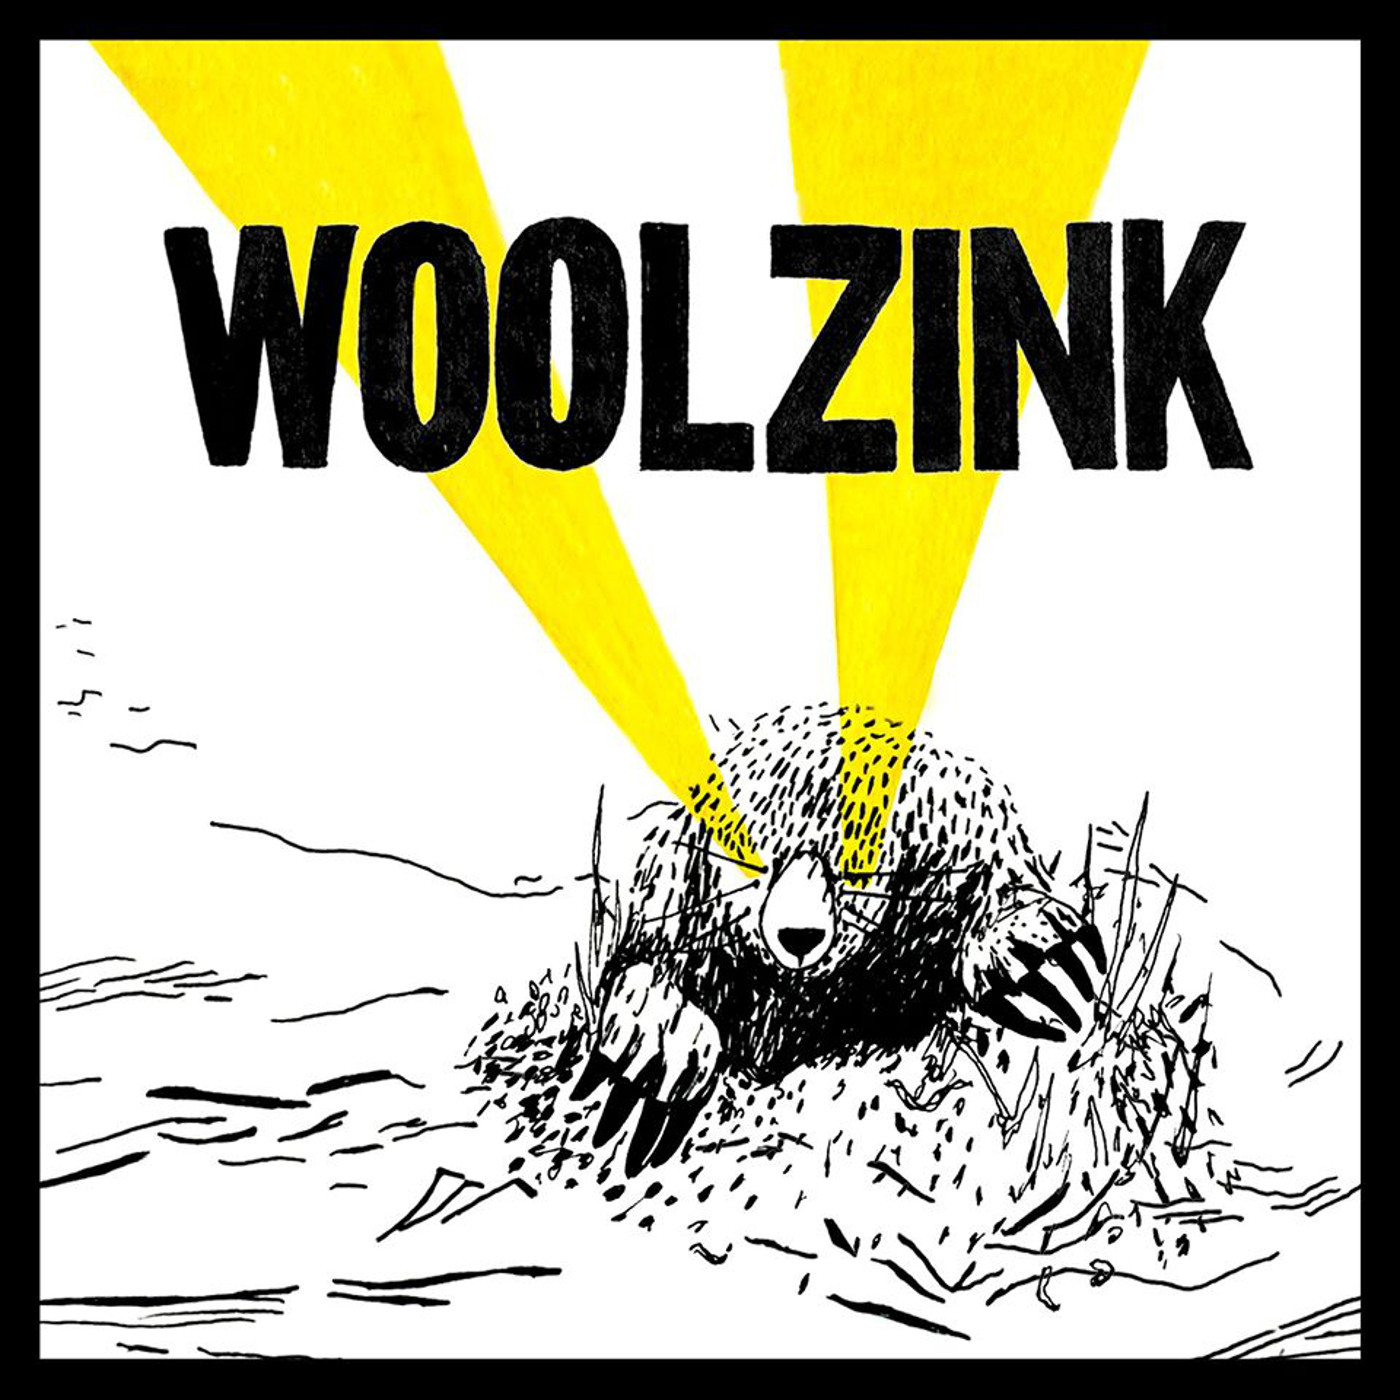 Woolzink